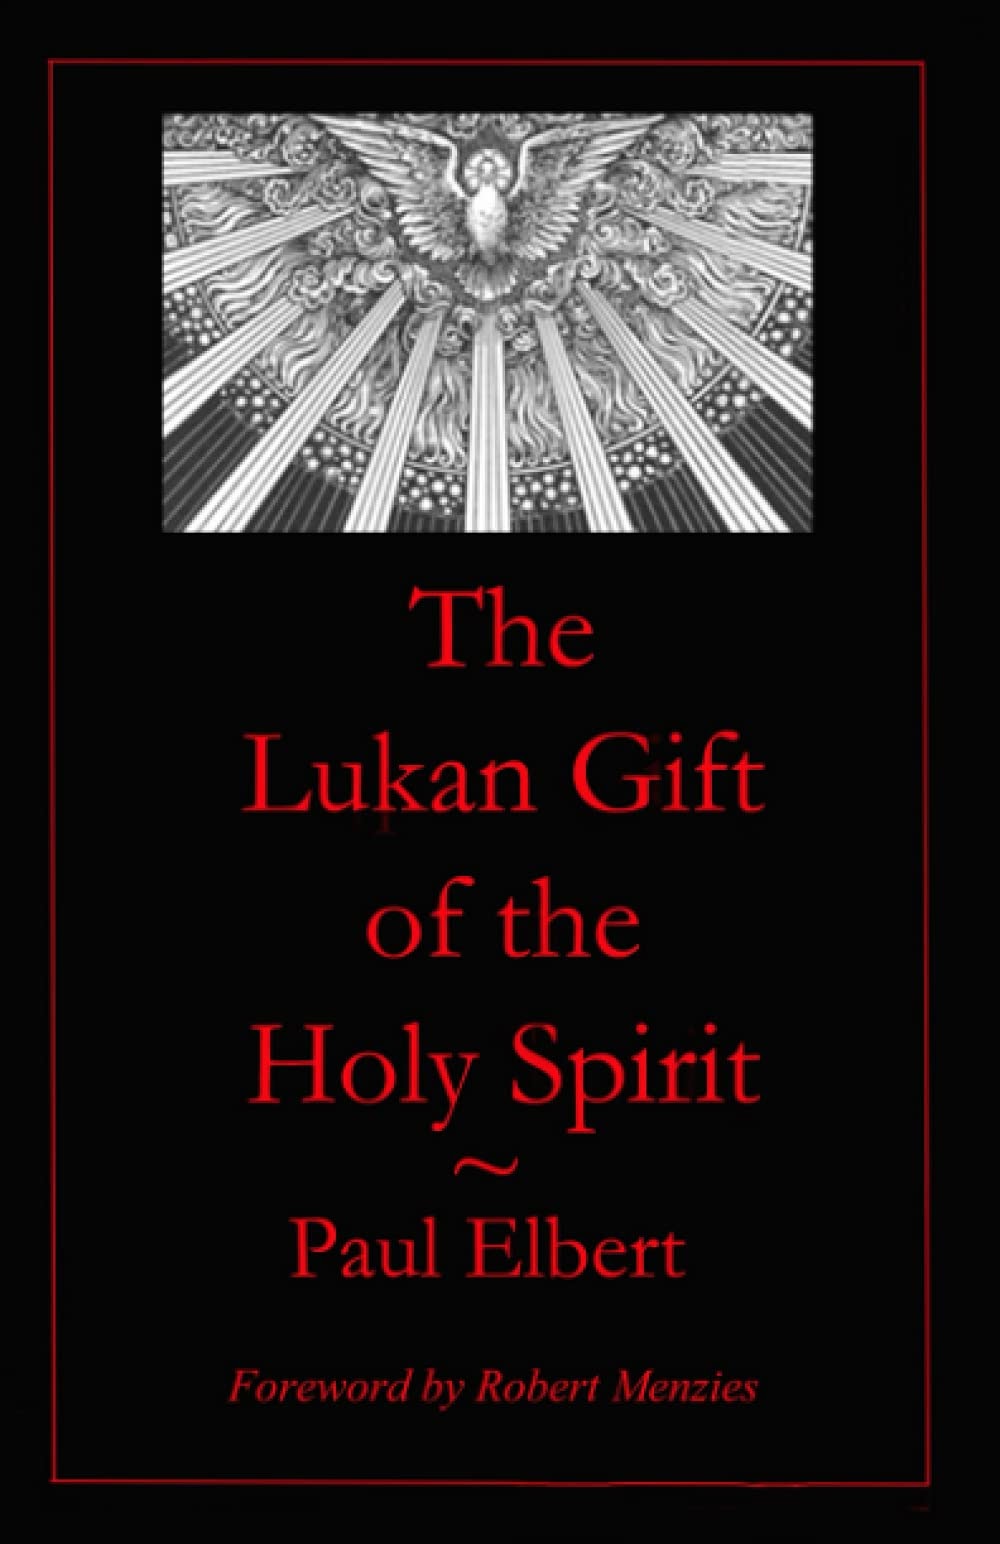 Paul Elbert: The Lukan Gift of the Holy Spirit